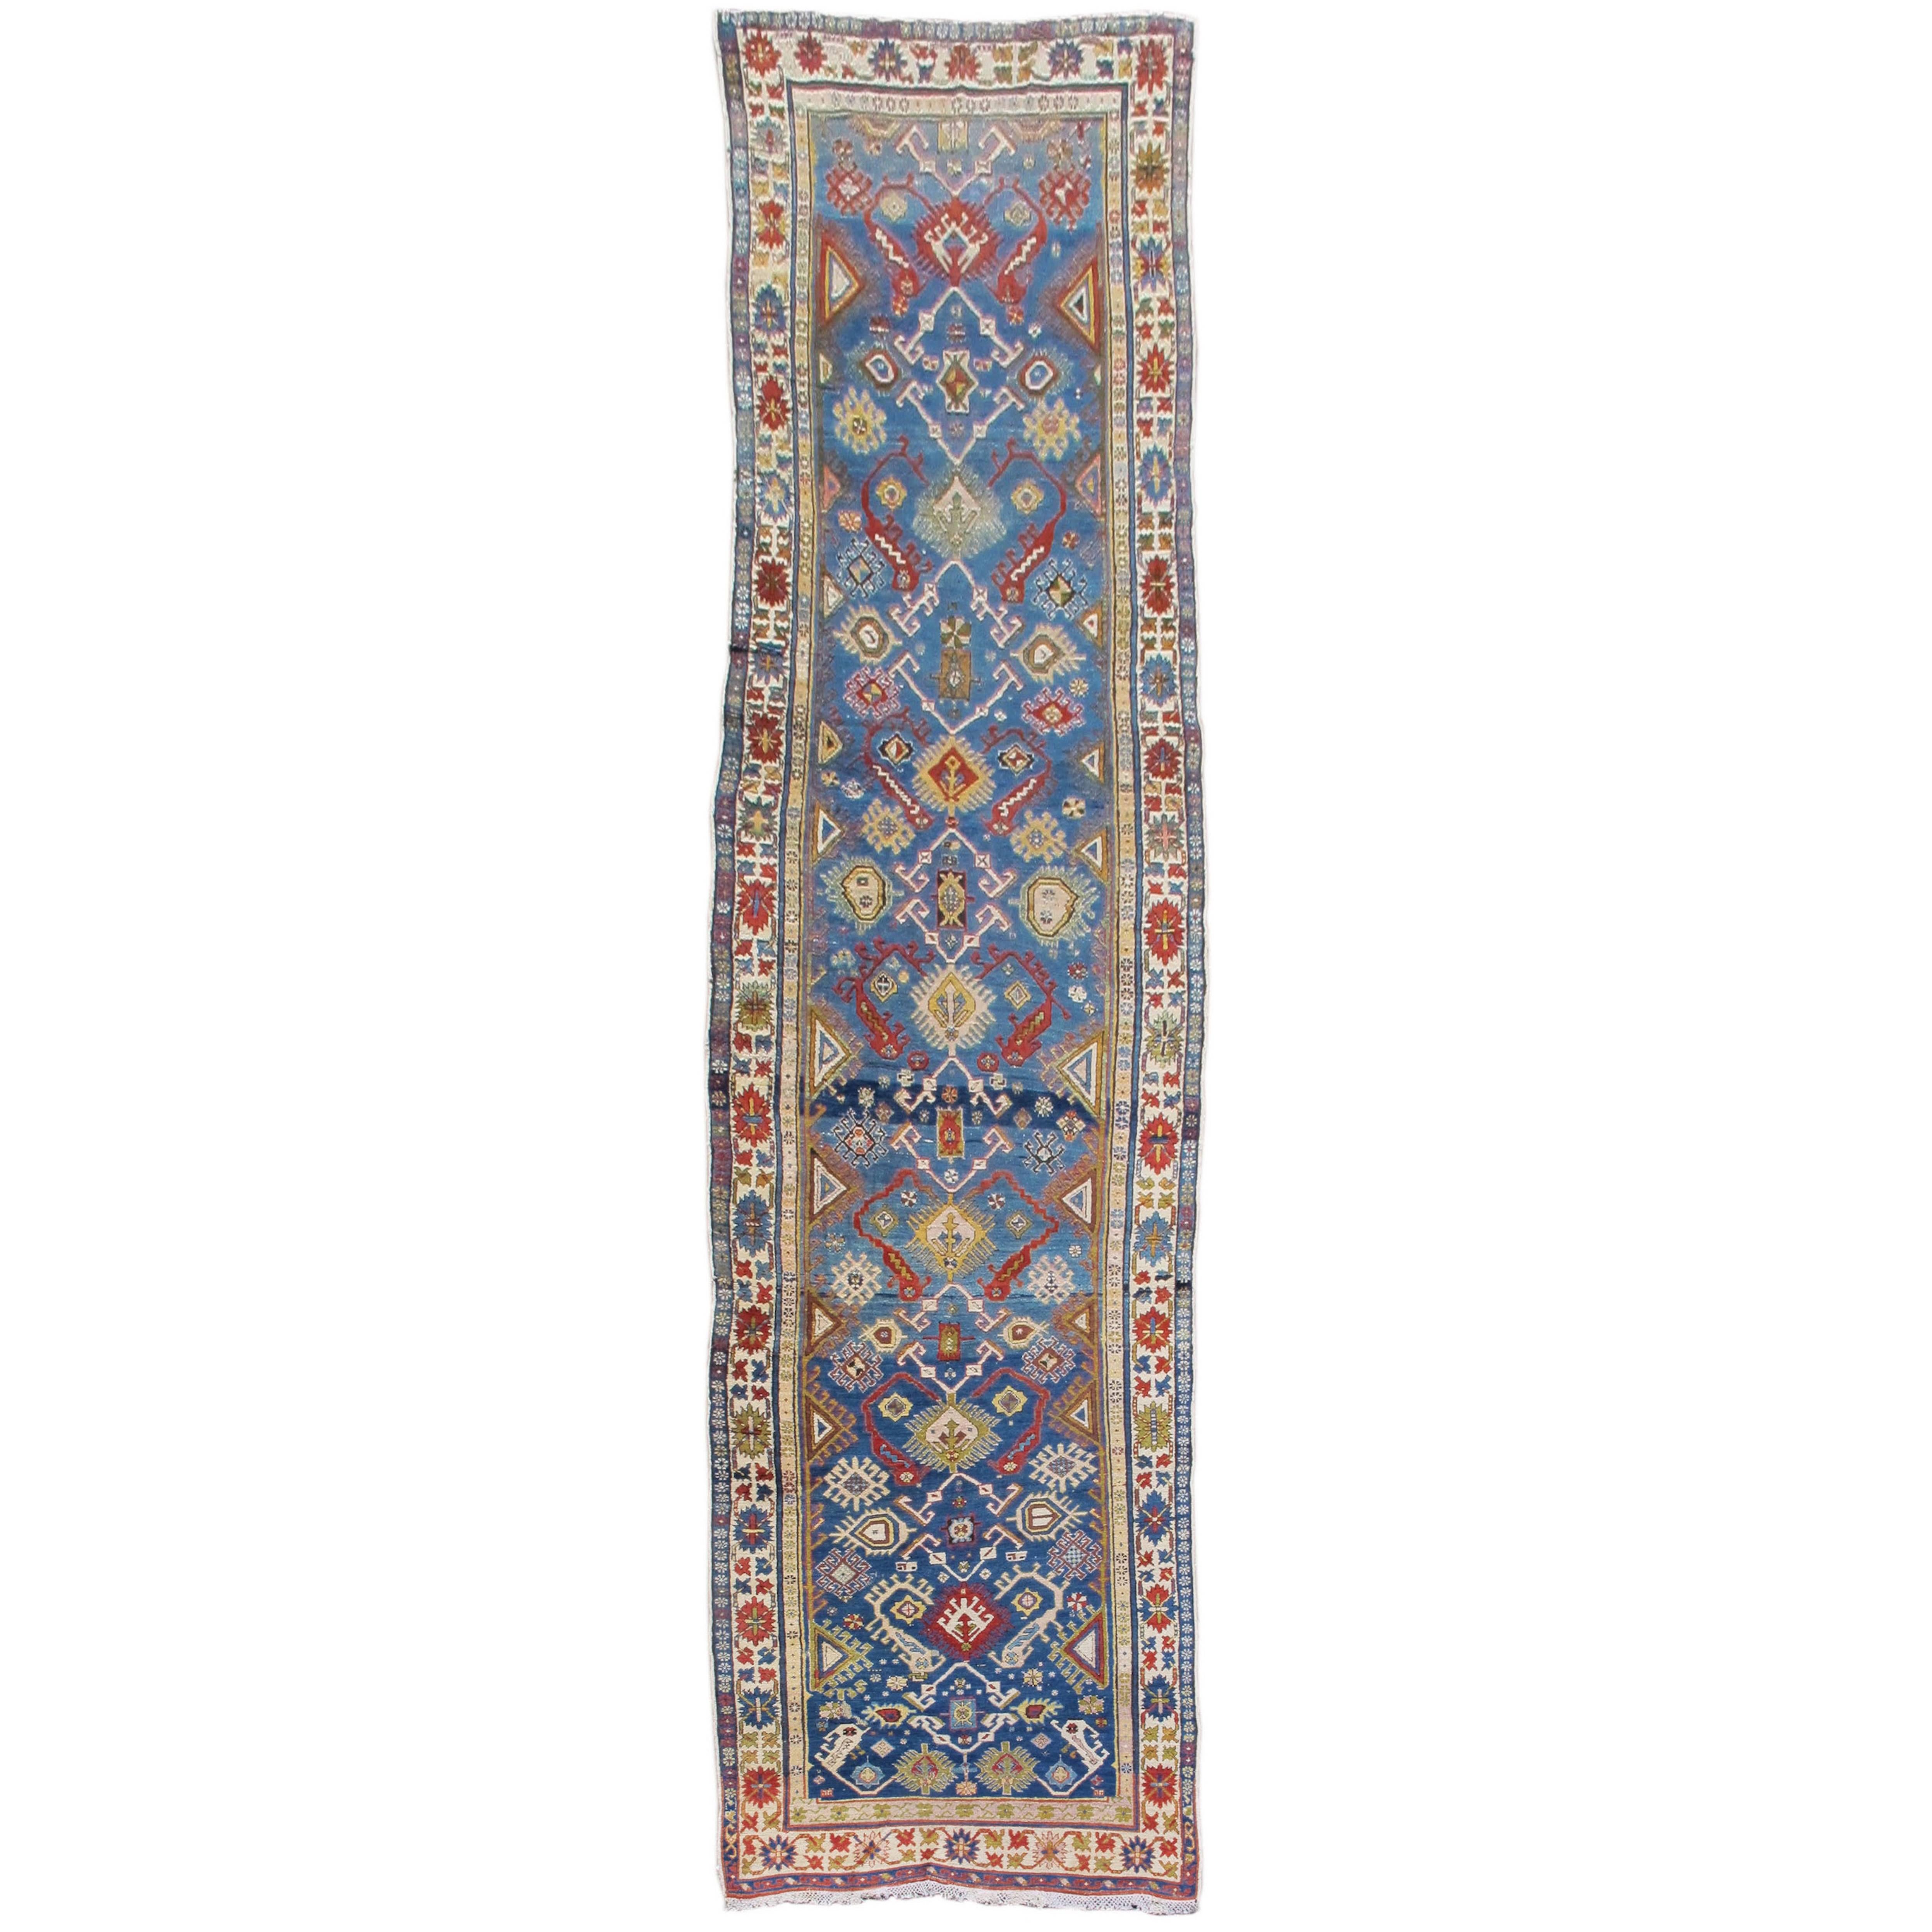 Late 19th Century Blue Caucasian Derbend Carpet